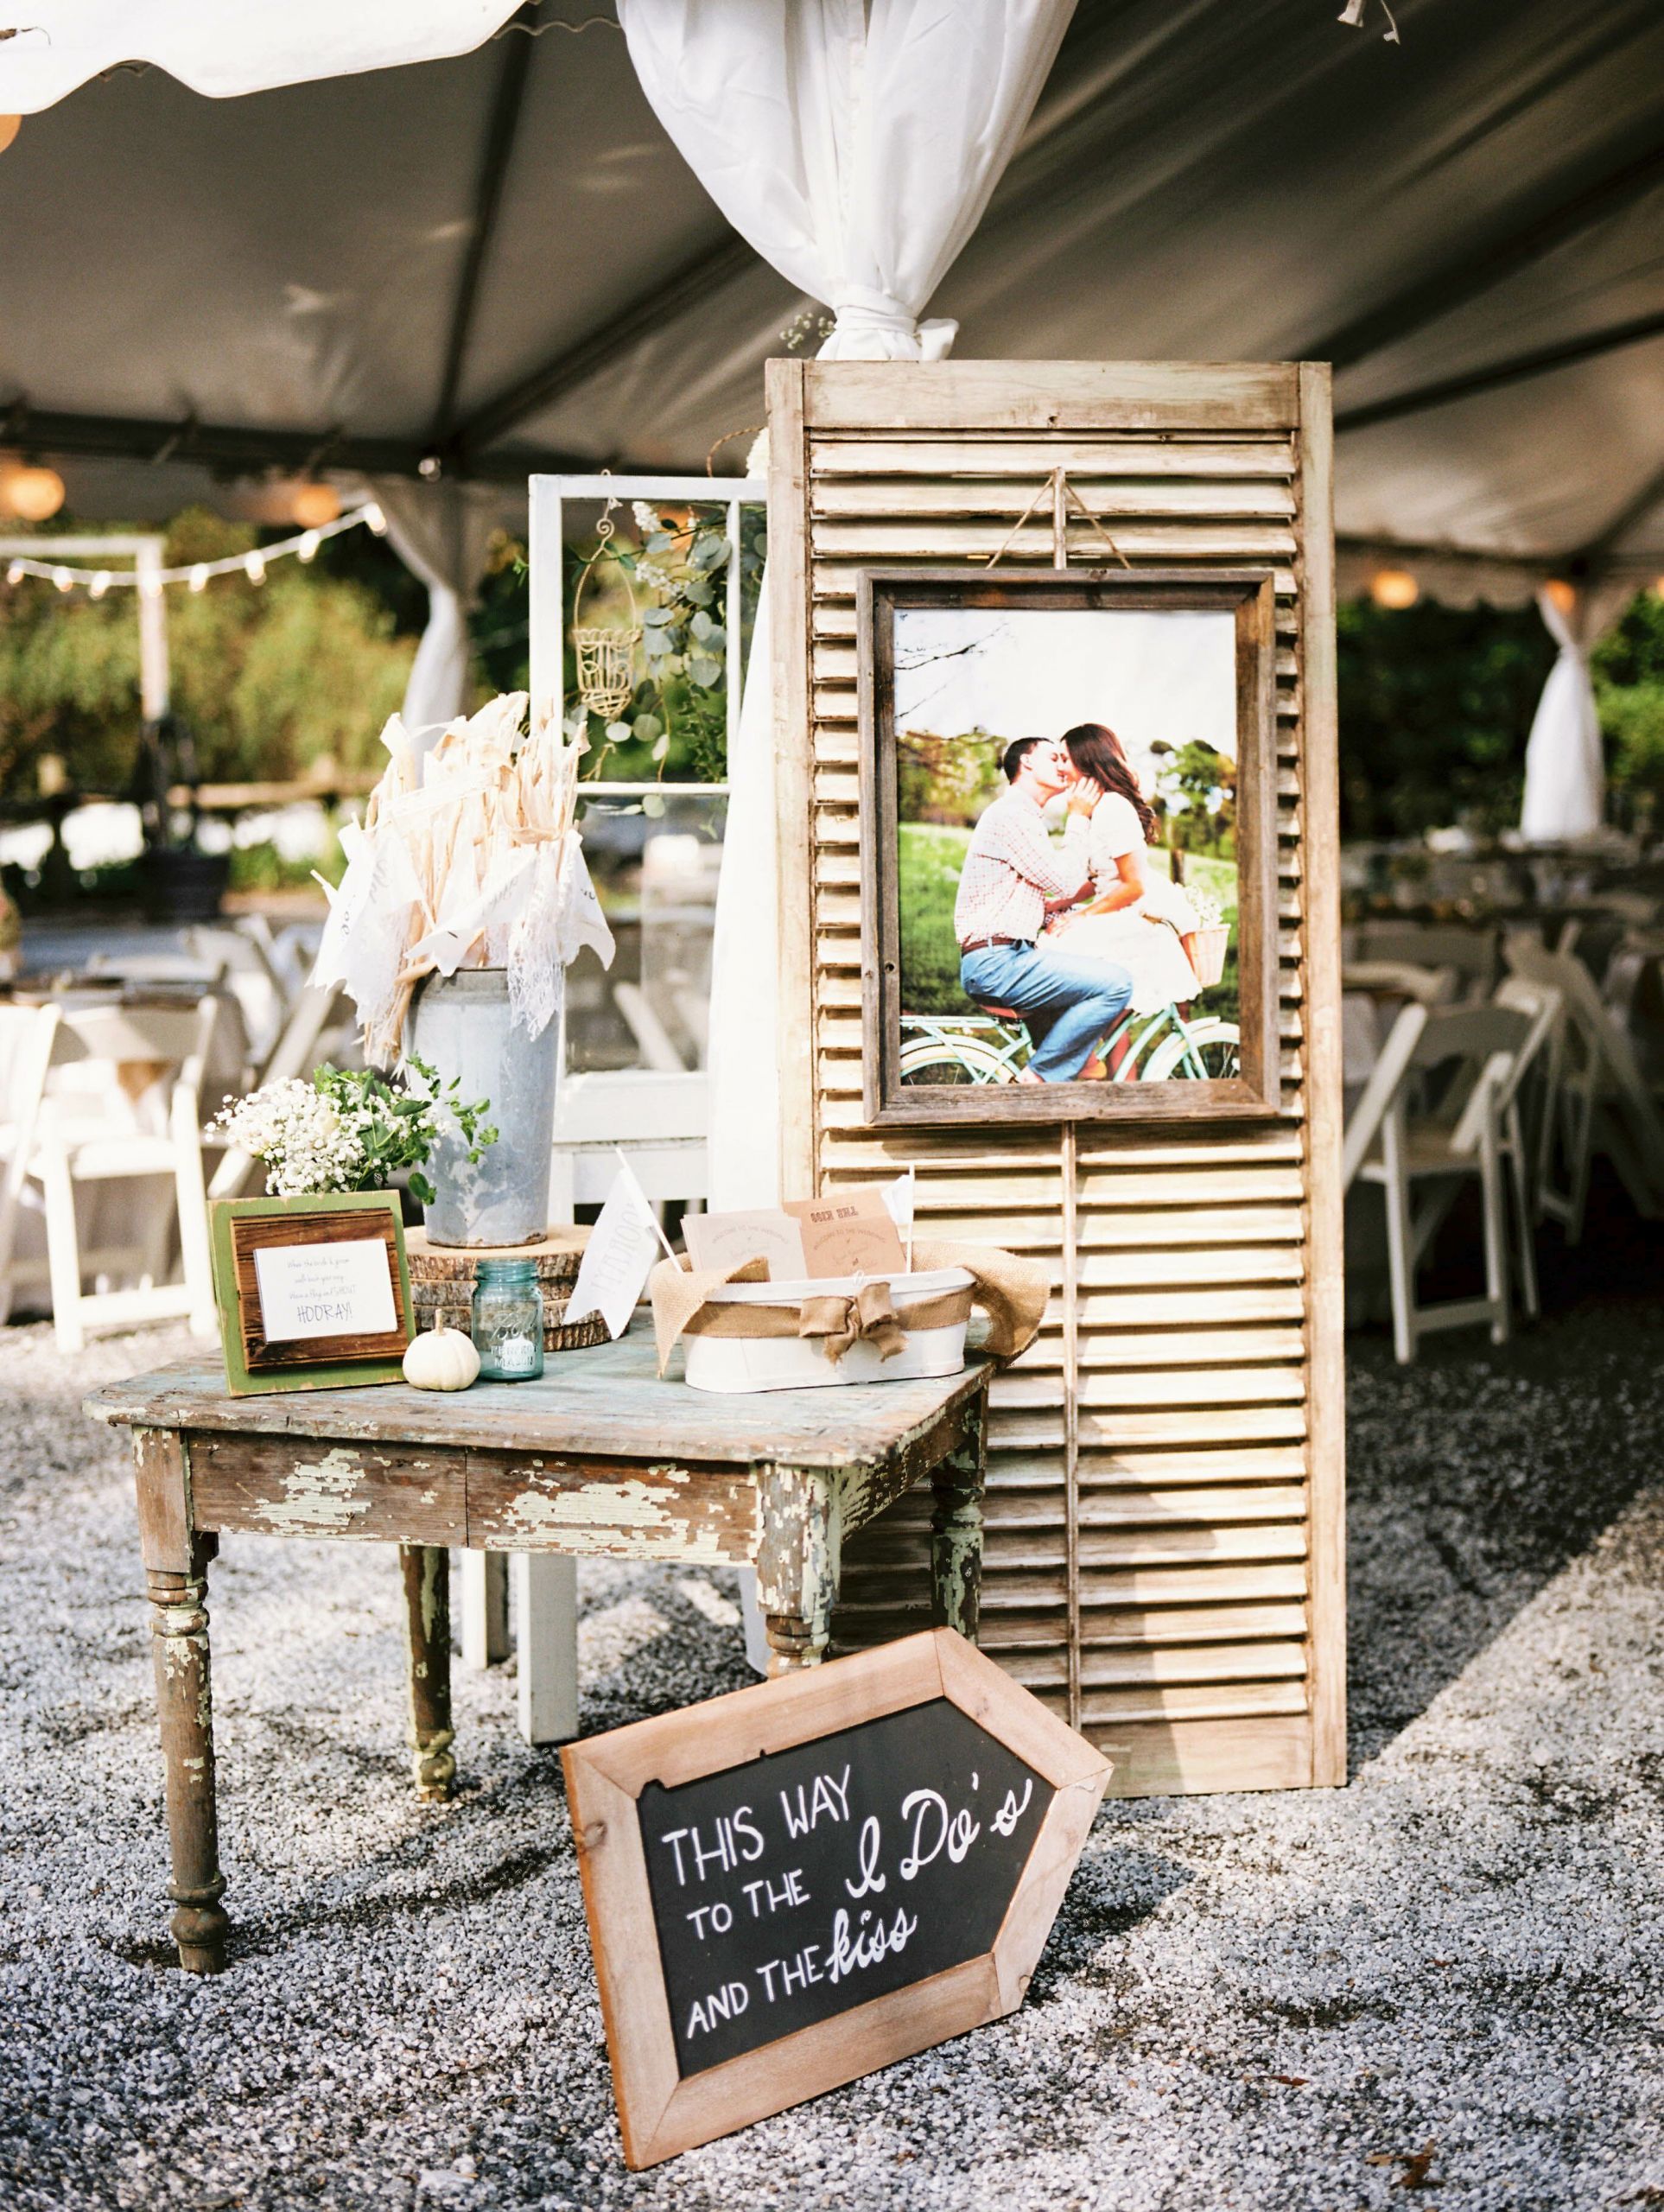 DIY Wedding Reception Ideas
 Rustic DIY Farm Reception Decor